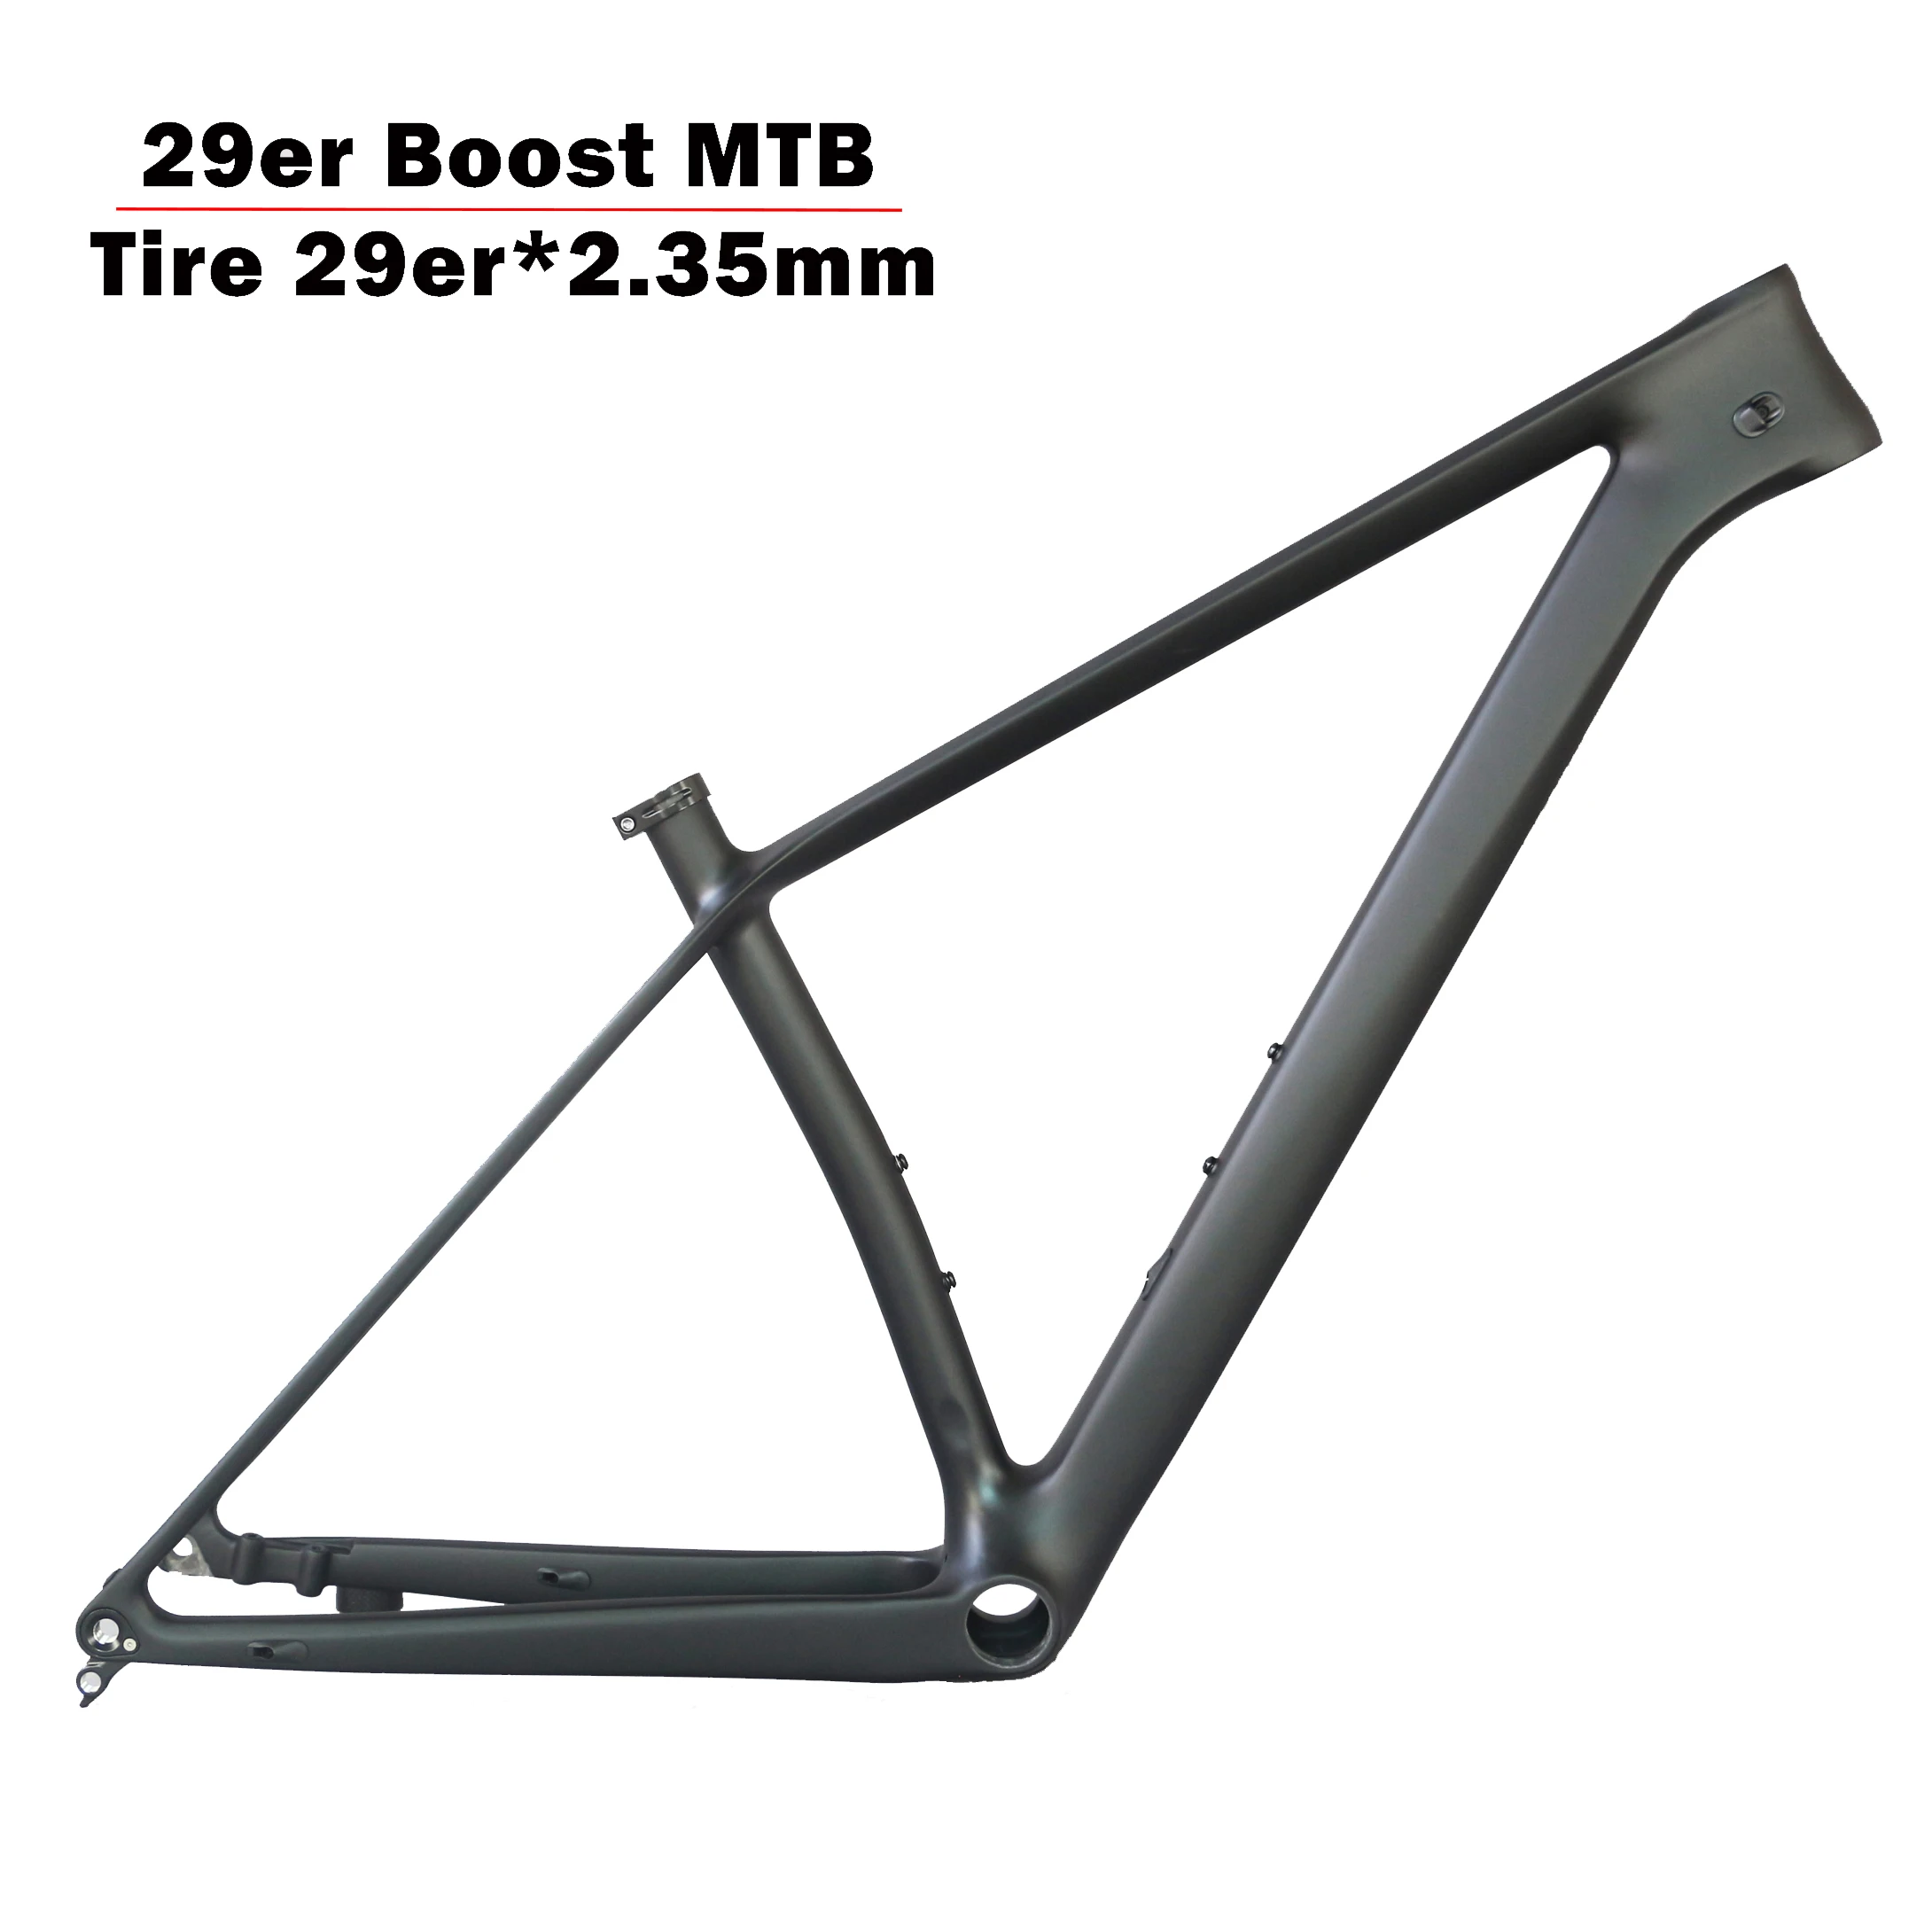 Excellent 2019 super light FM199 carbon Mountain Bicycle Frame 29er Boost 29er plus  BB92 with 29er*2.35 tire 1